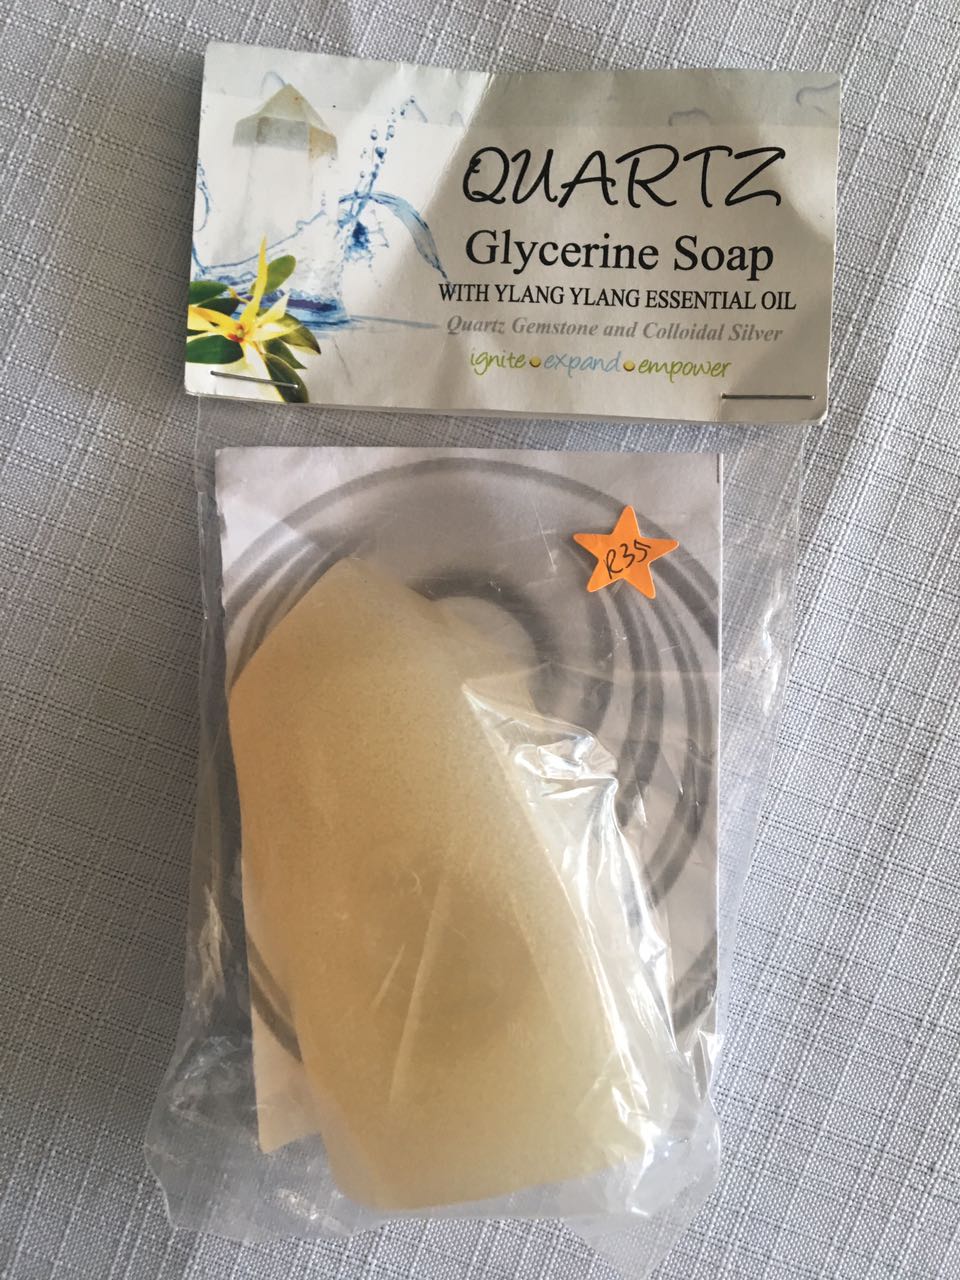 Quartz Glycerine Soap